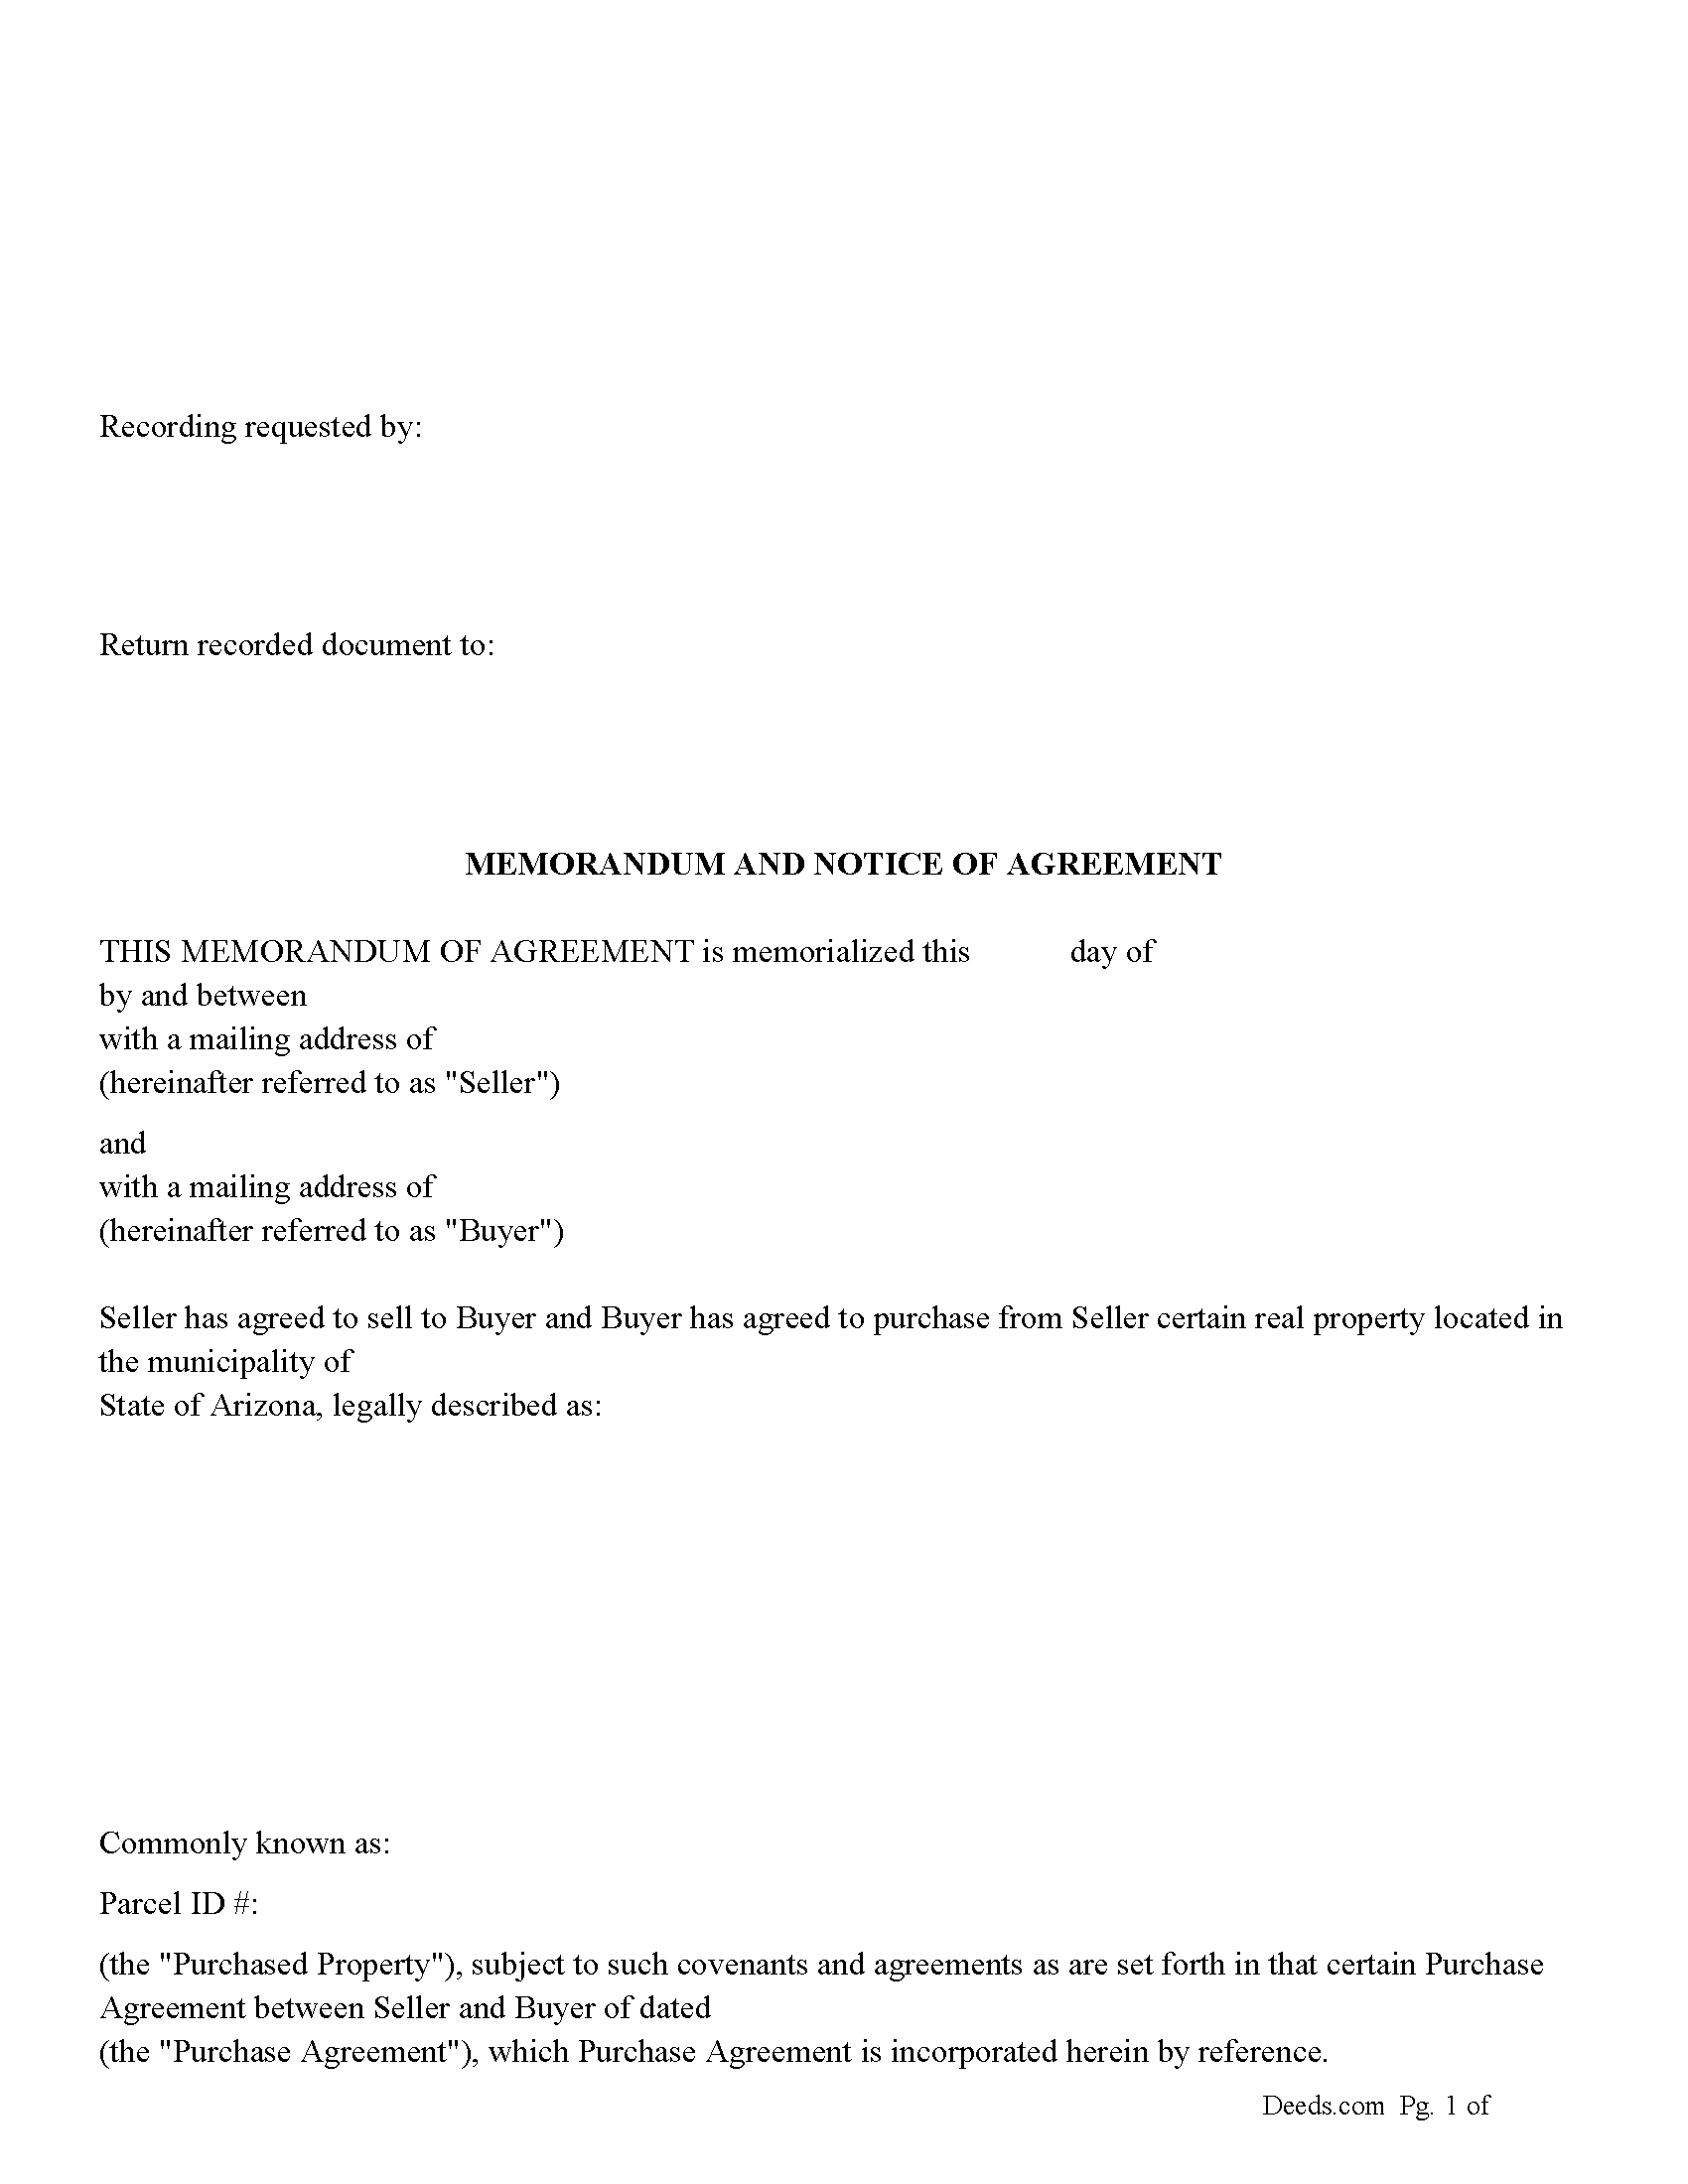 Arizona Memorandum and Notice of Agreement Image